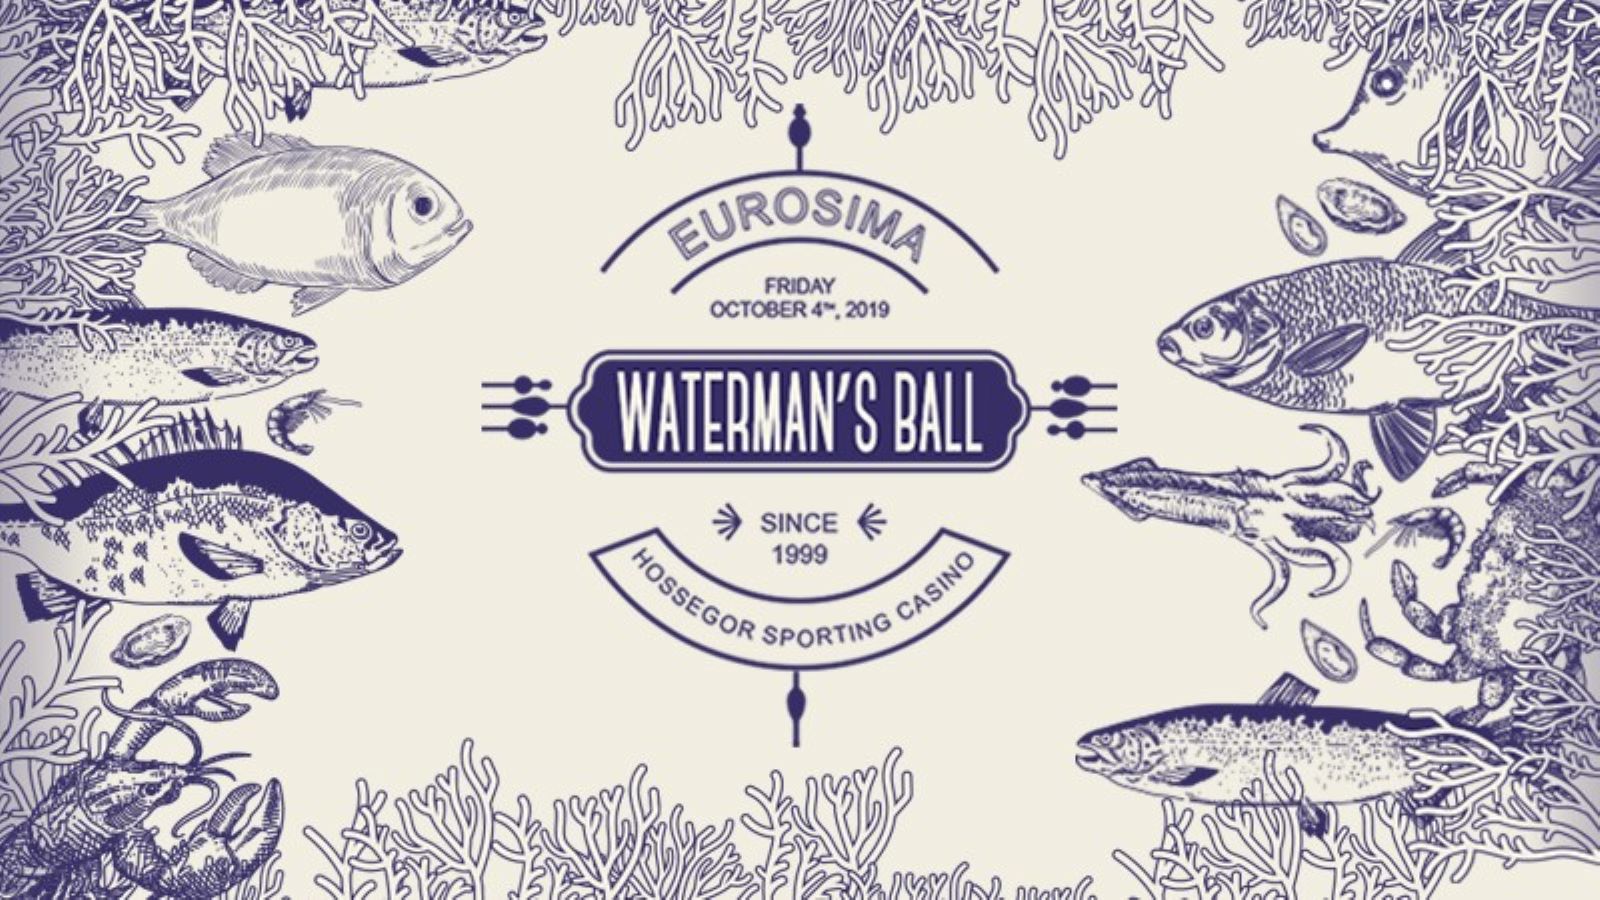 Waterman's Ball poster, October 2019